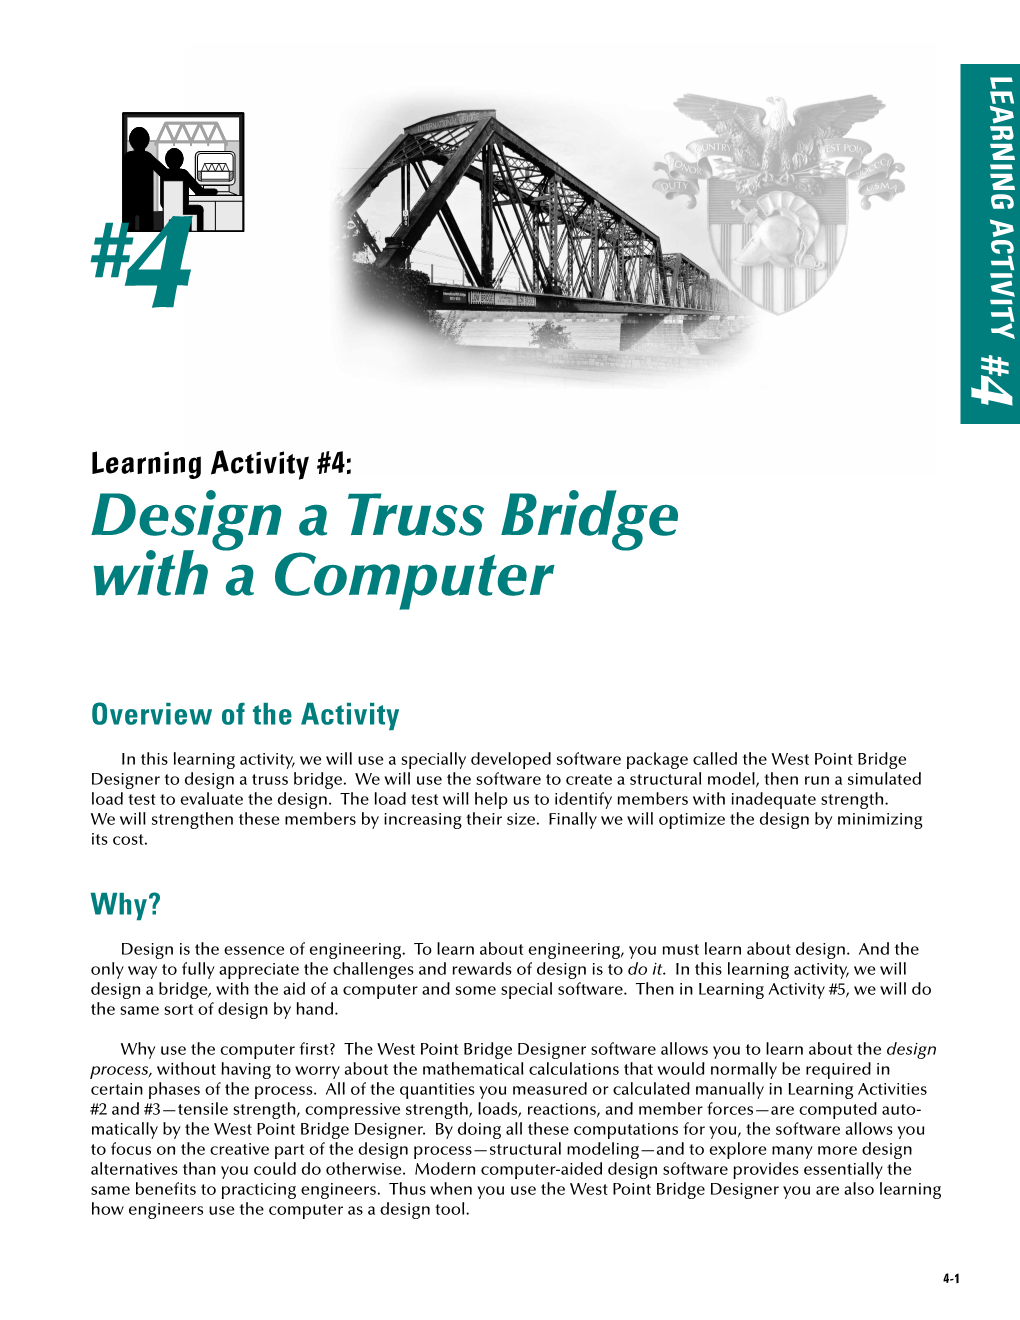 Design a Truss Bridge with a Computer